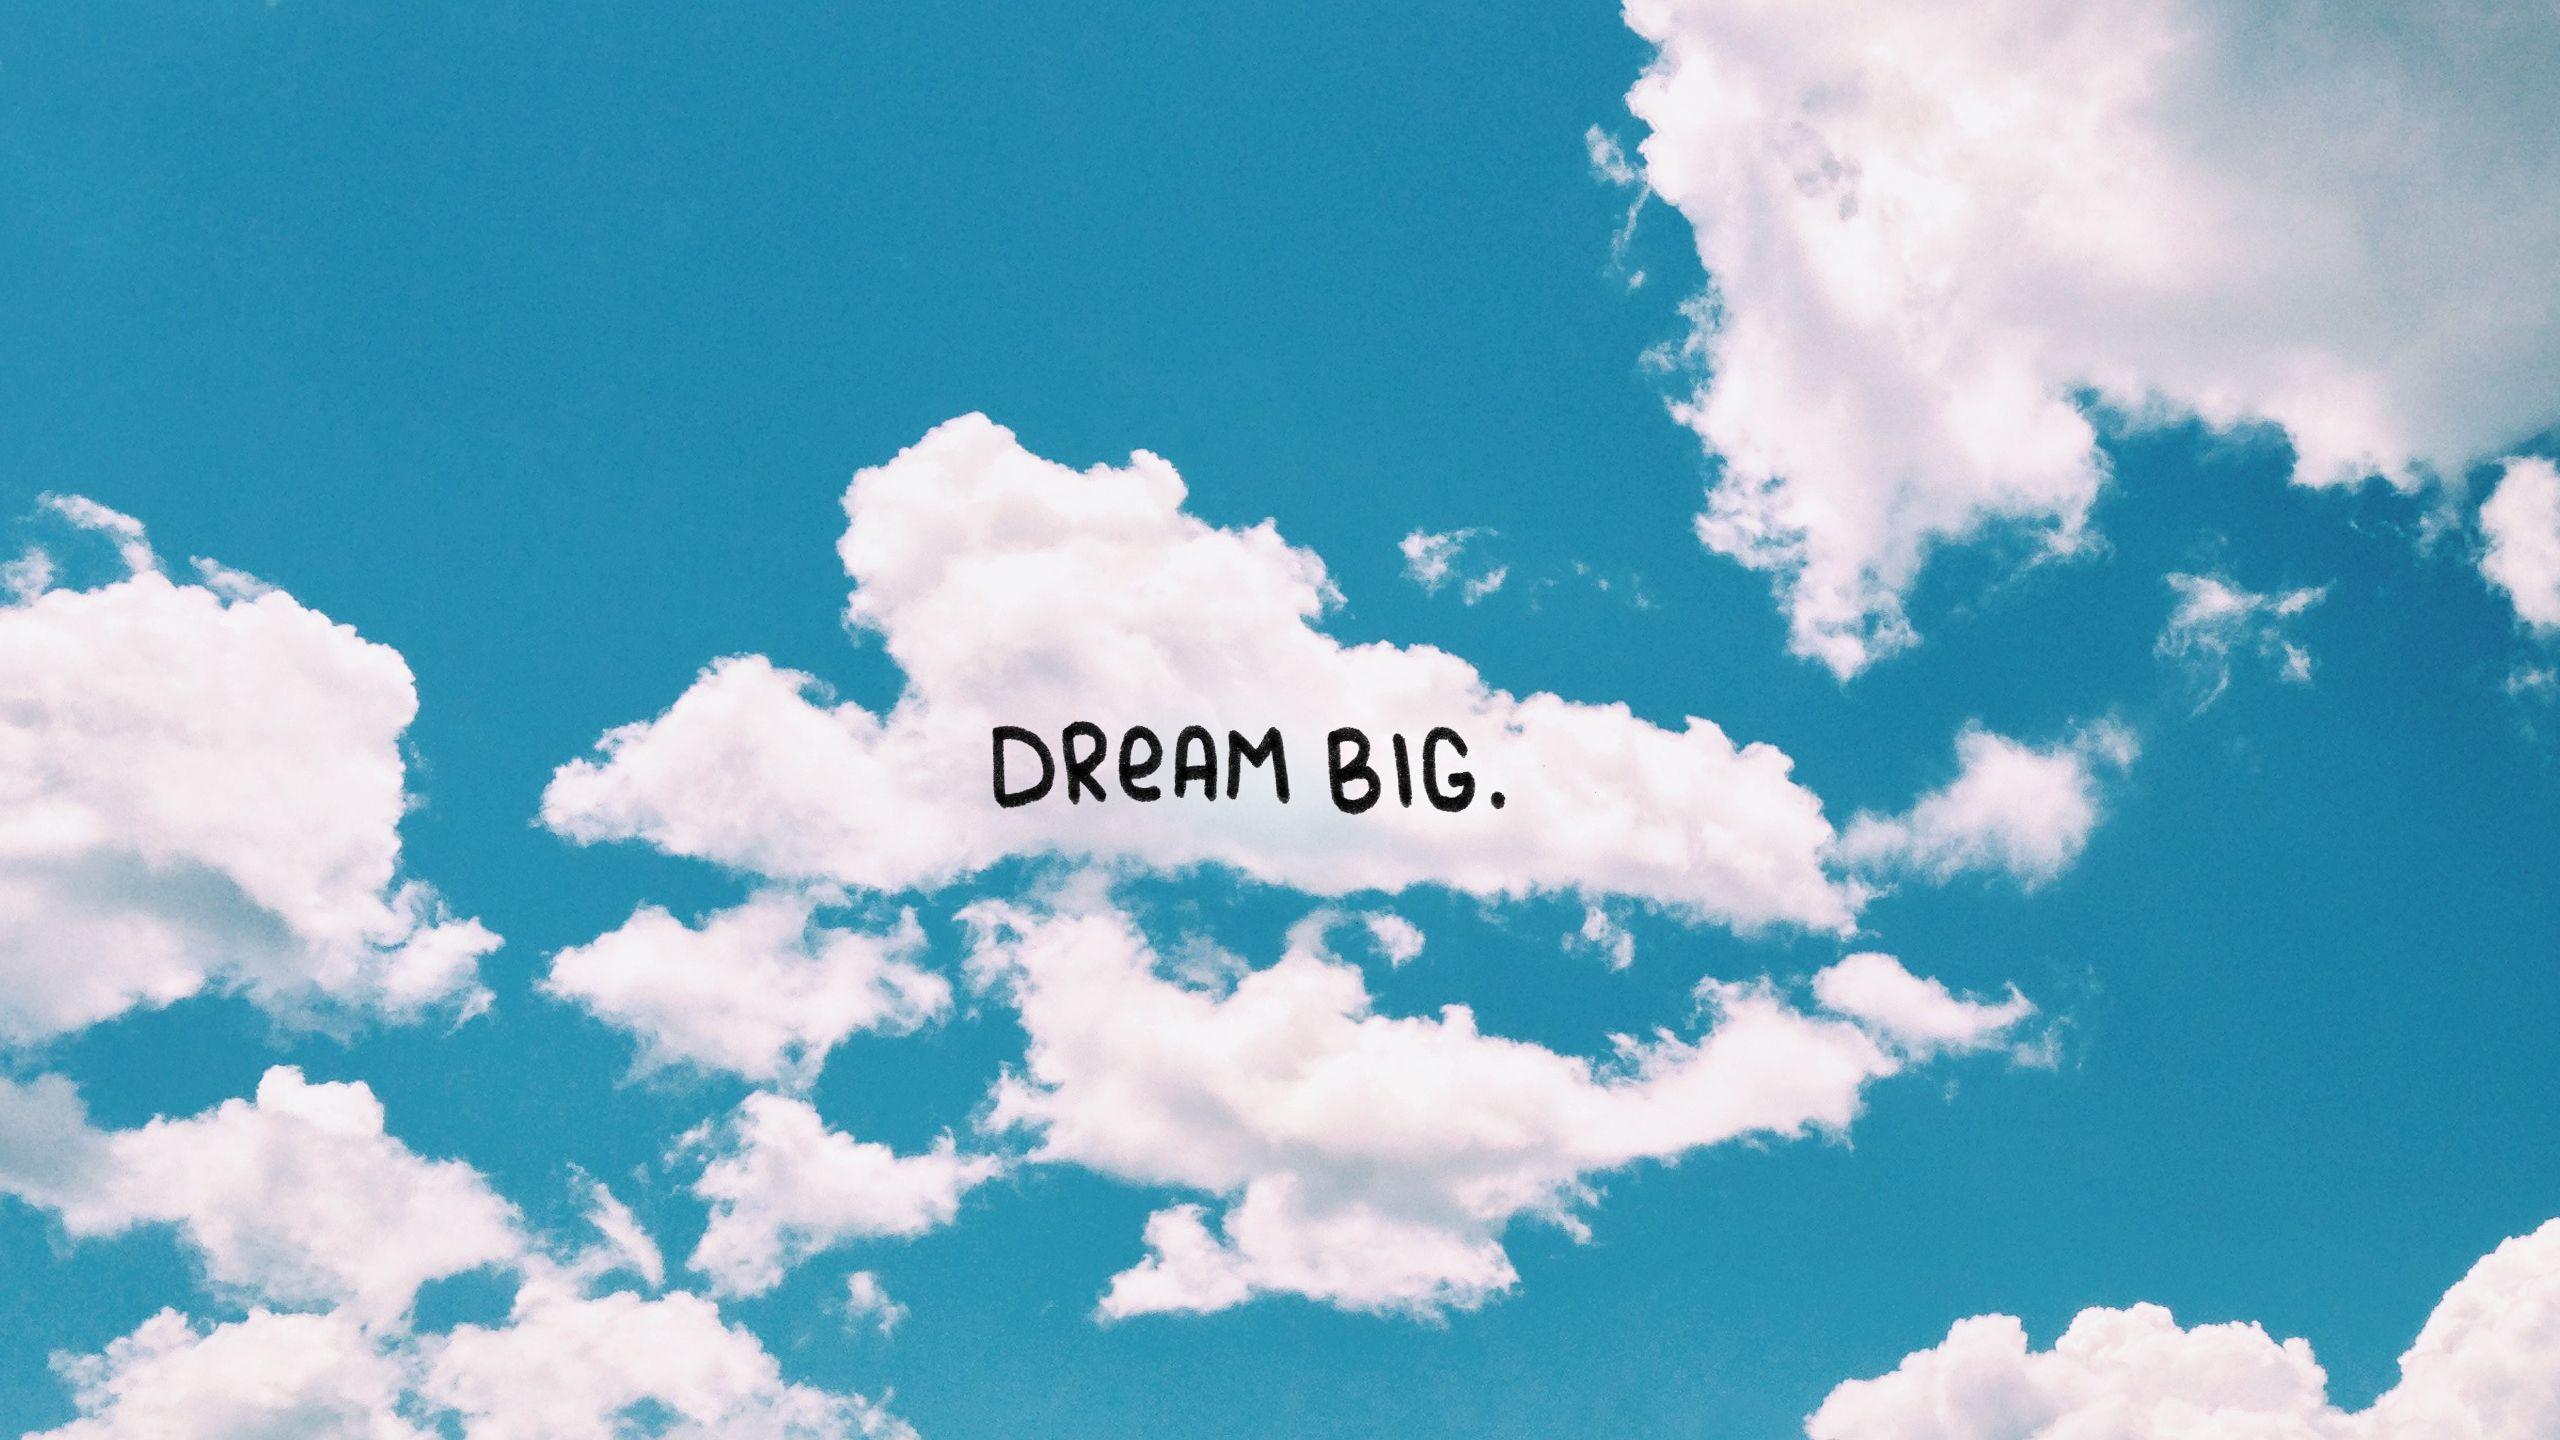 Dream big clouds blue sky desktop wallpaper background. Wallpaper